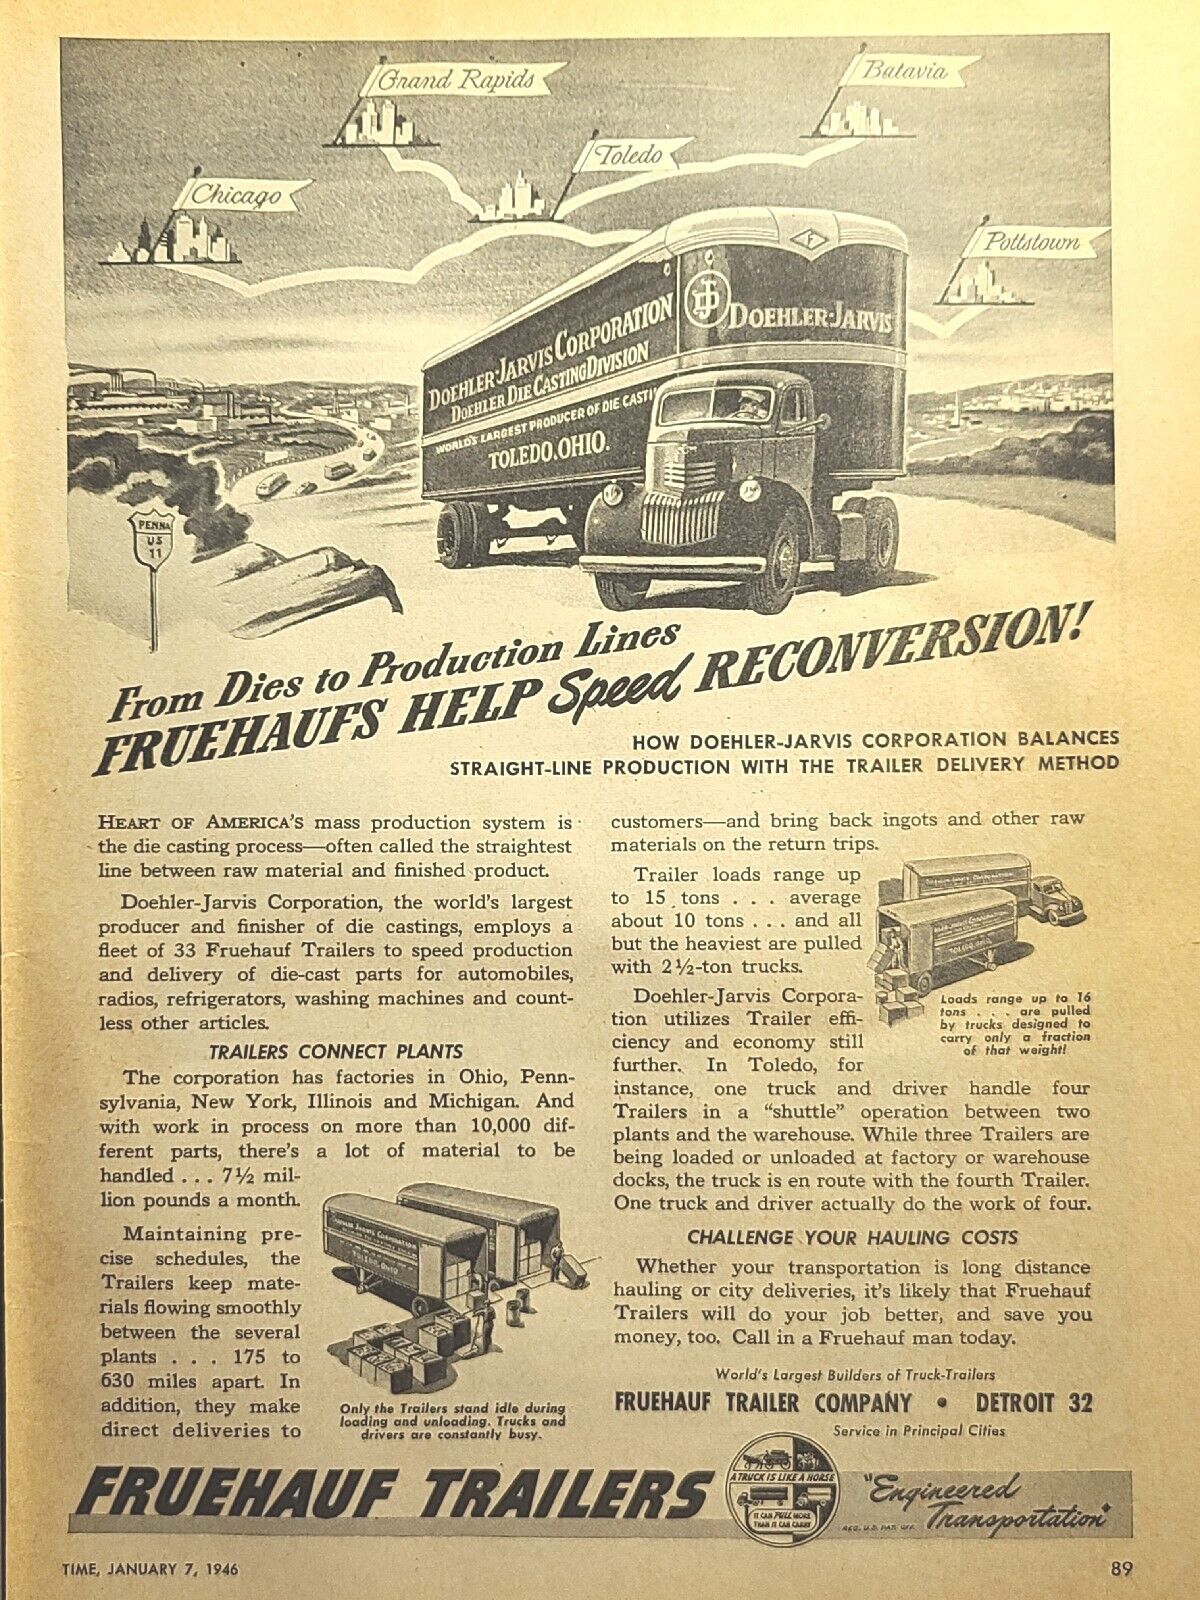 Fruehauf Trailers War Reconversion Doehler-Jarvis Toledo Vintage Print Ad 1946